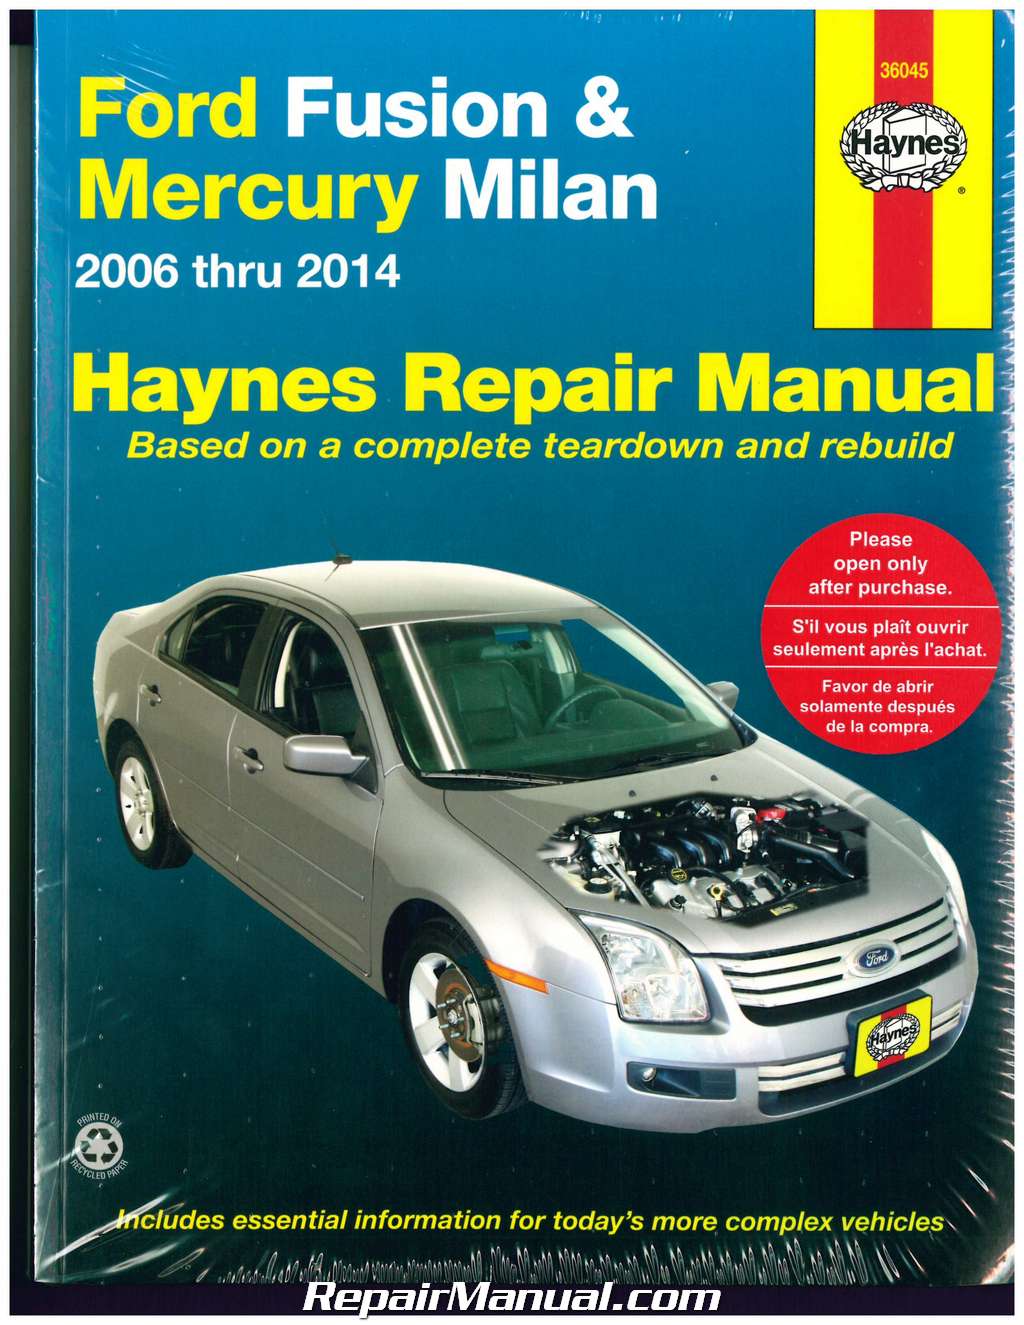 2007 ford fusion service manual